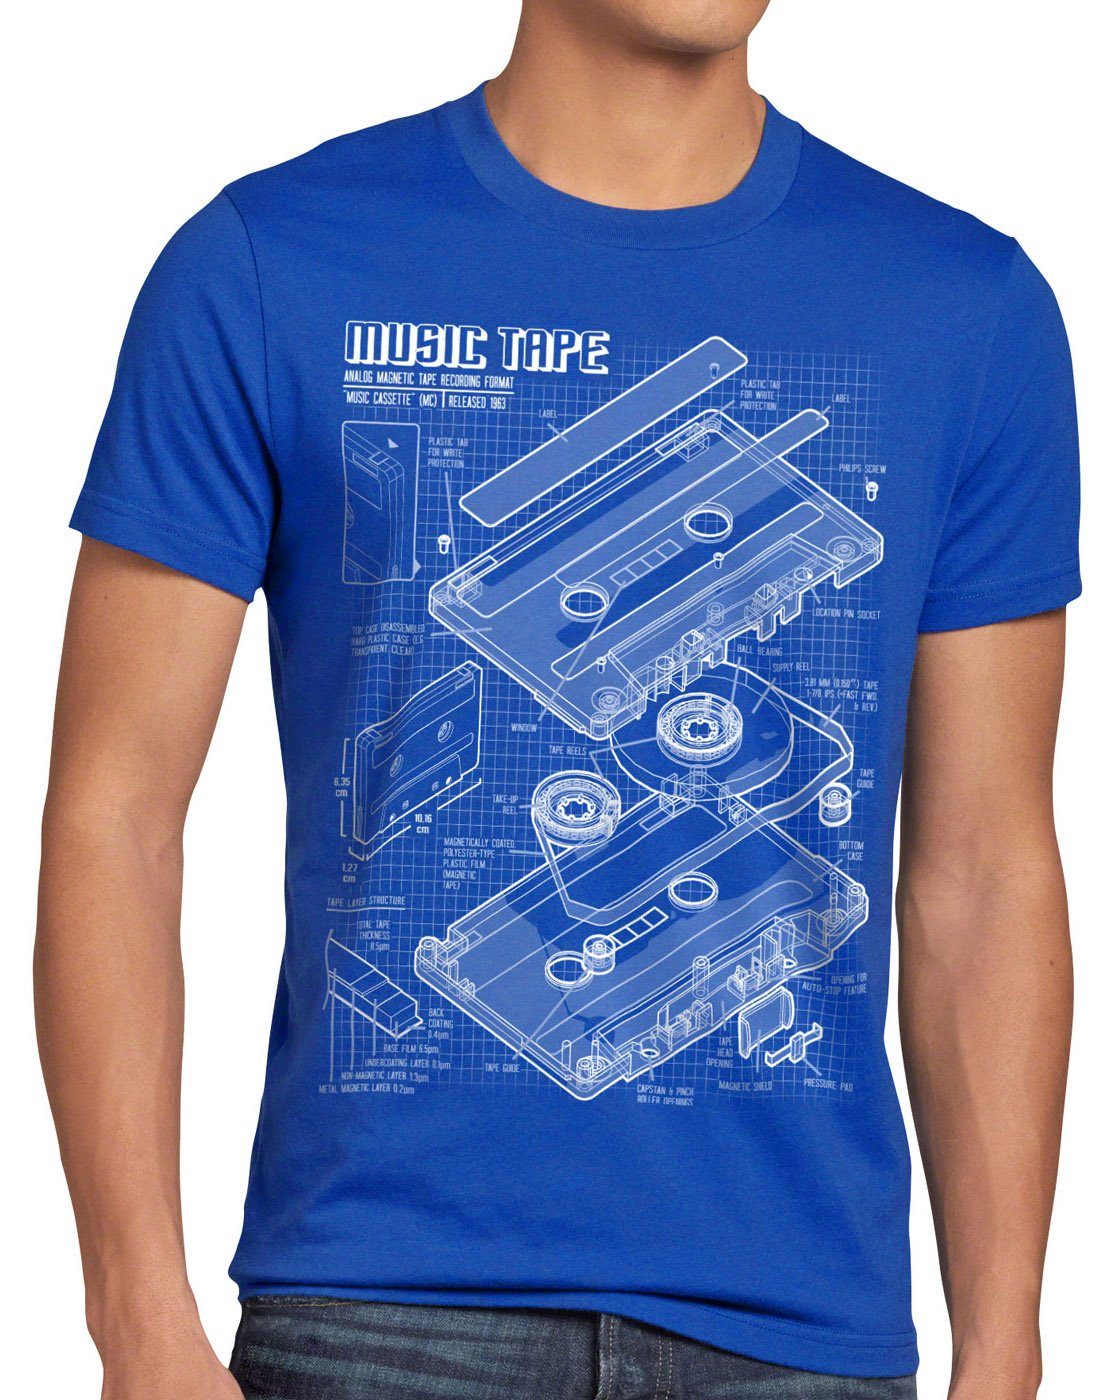 Print-Shirt analog disco musik DJ disko T-Shirt Kassette blau MC Herren turntable retro TAPE ndw style3